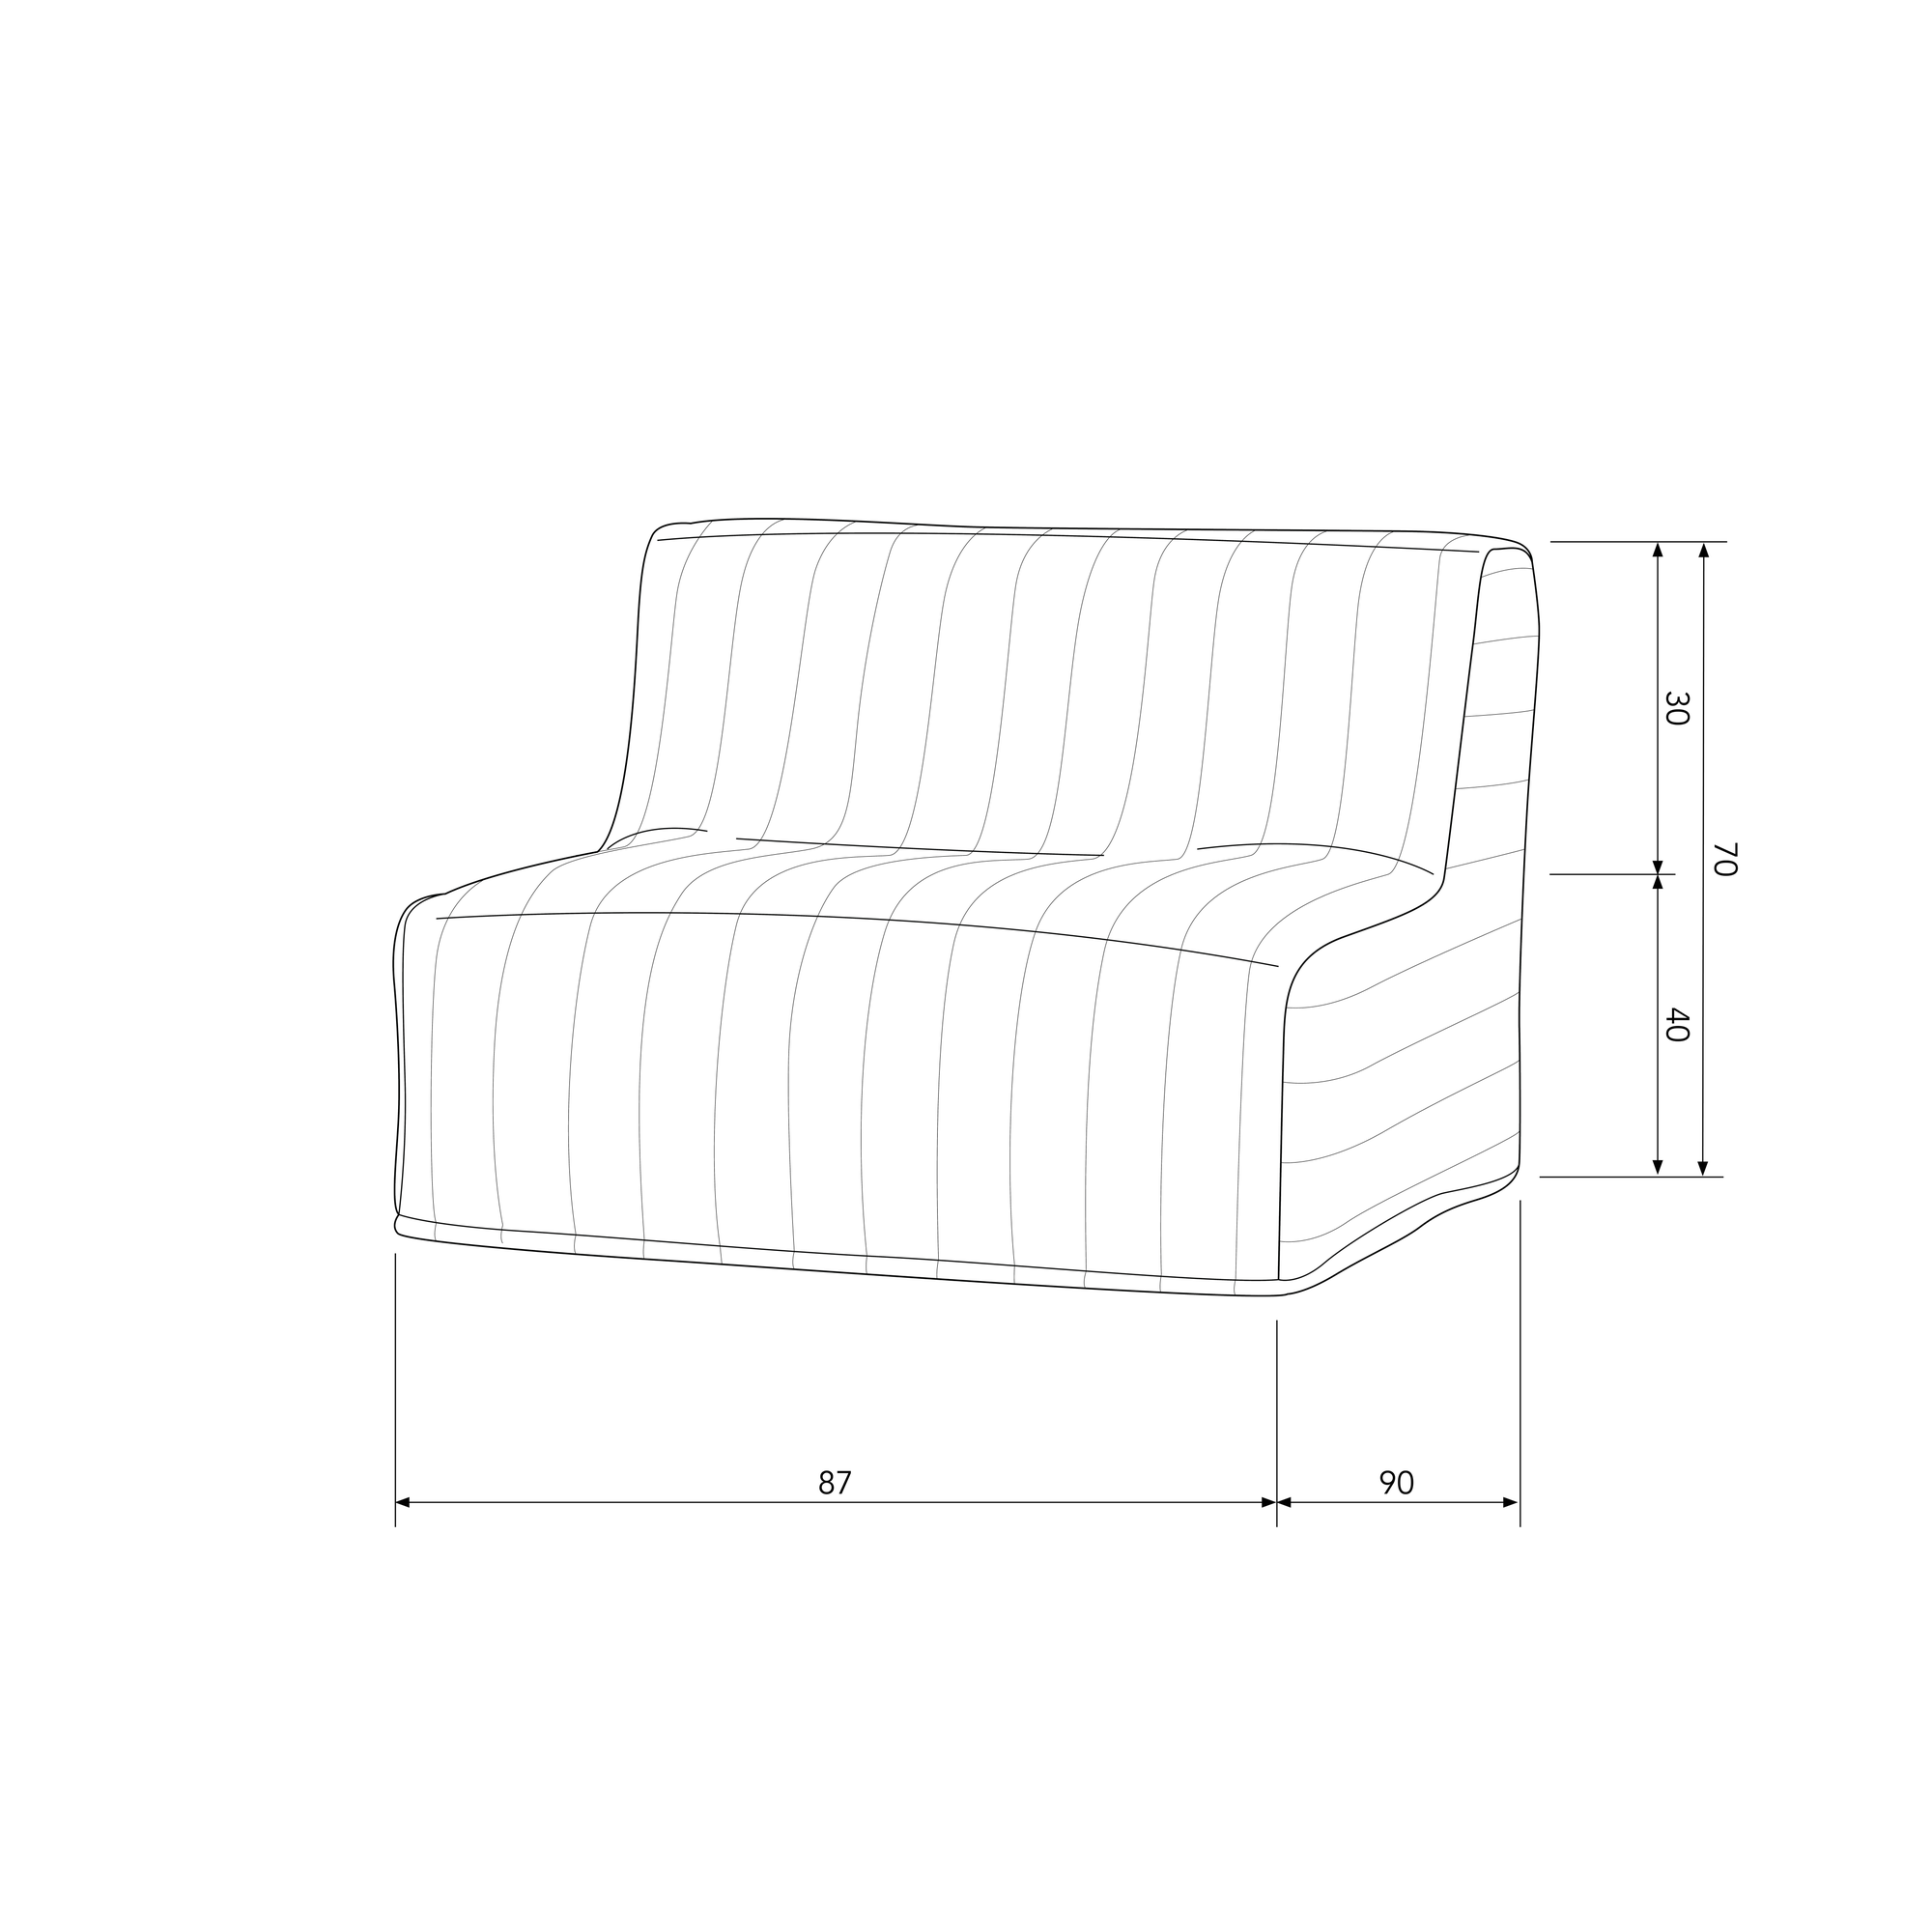 400506-Z-400506-S-50_BT_Sit_on_Air_armchair.jpg?auto=webp&format=png&width=2000&height=2000